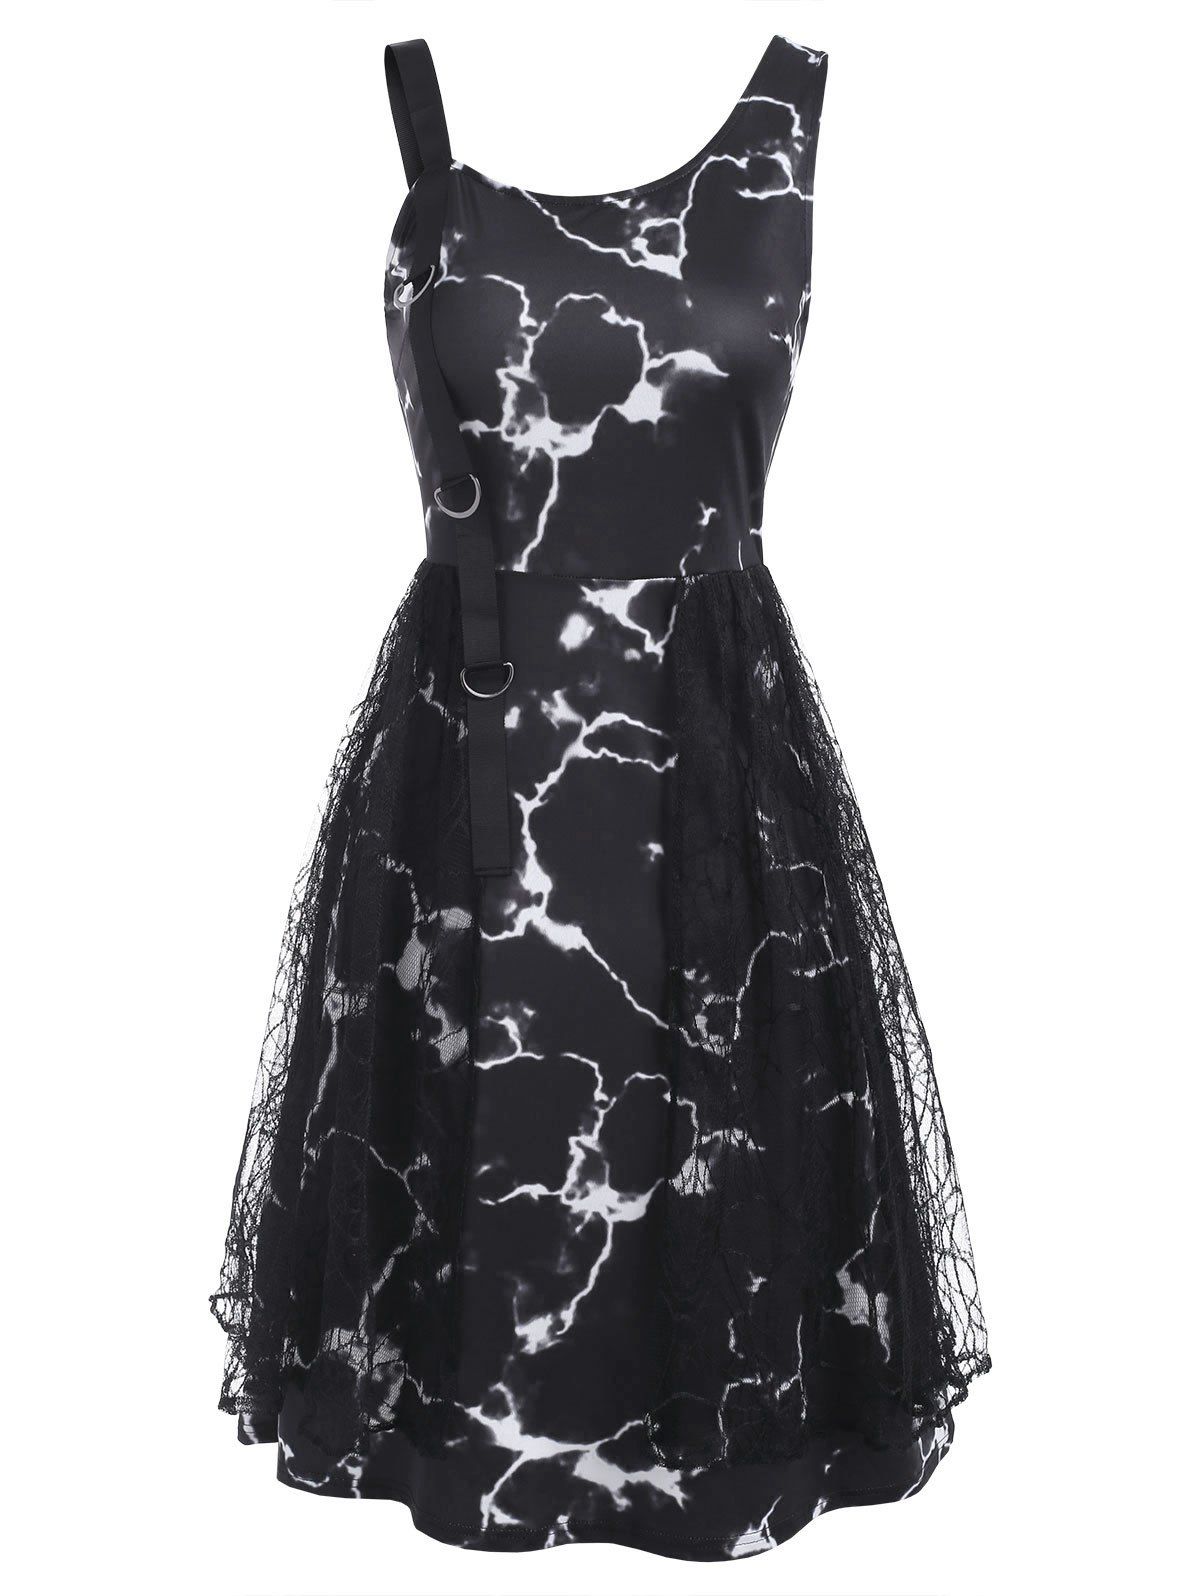 Marble Print D-ring Lace Panel Asymmetric Neck Dress - BLACK 2XL